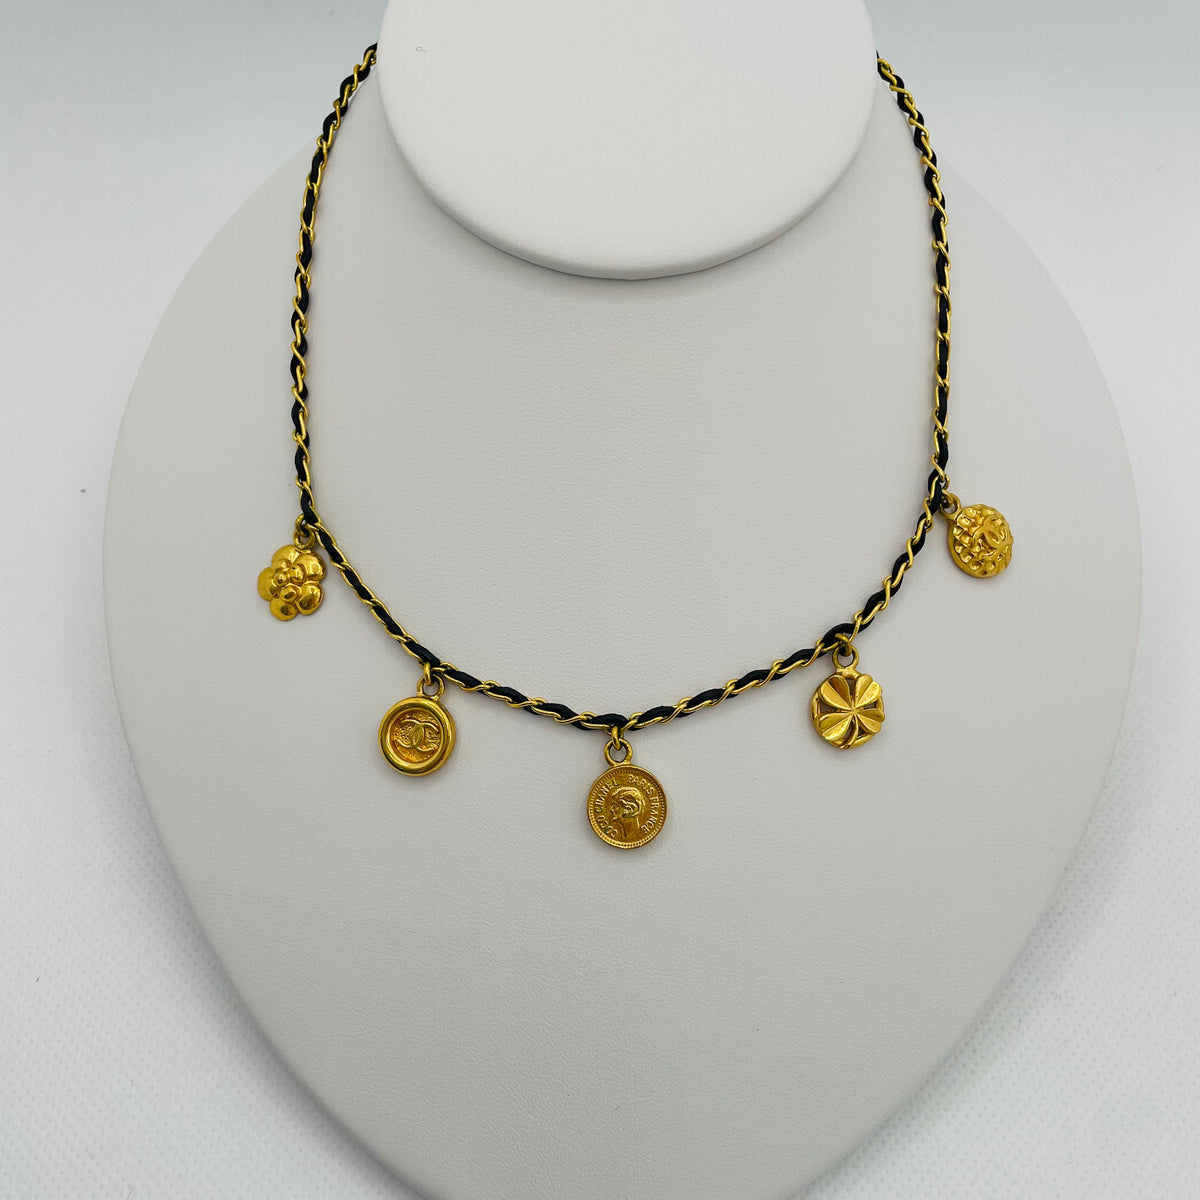 Sold at Auction: Vintage Chanel Heart Padlock Skeleton Key Necklace